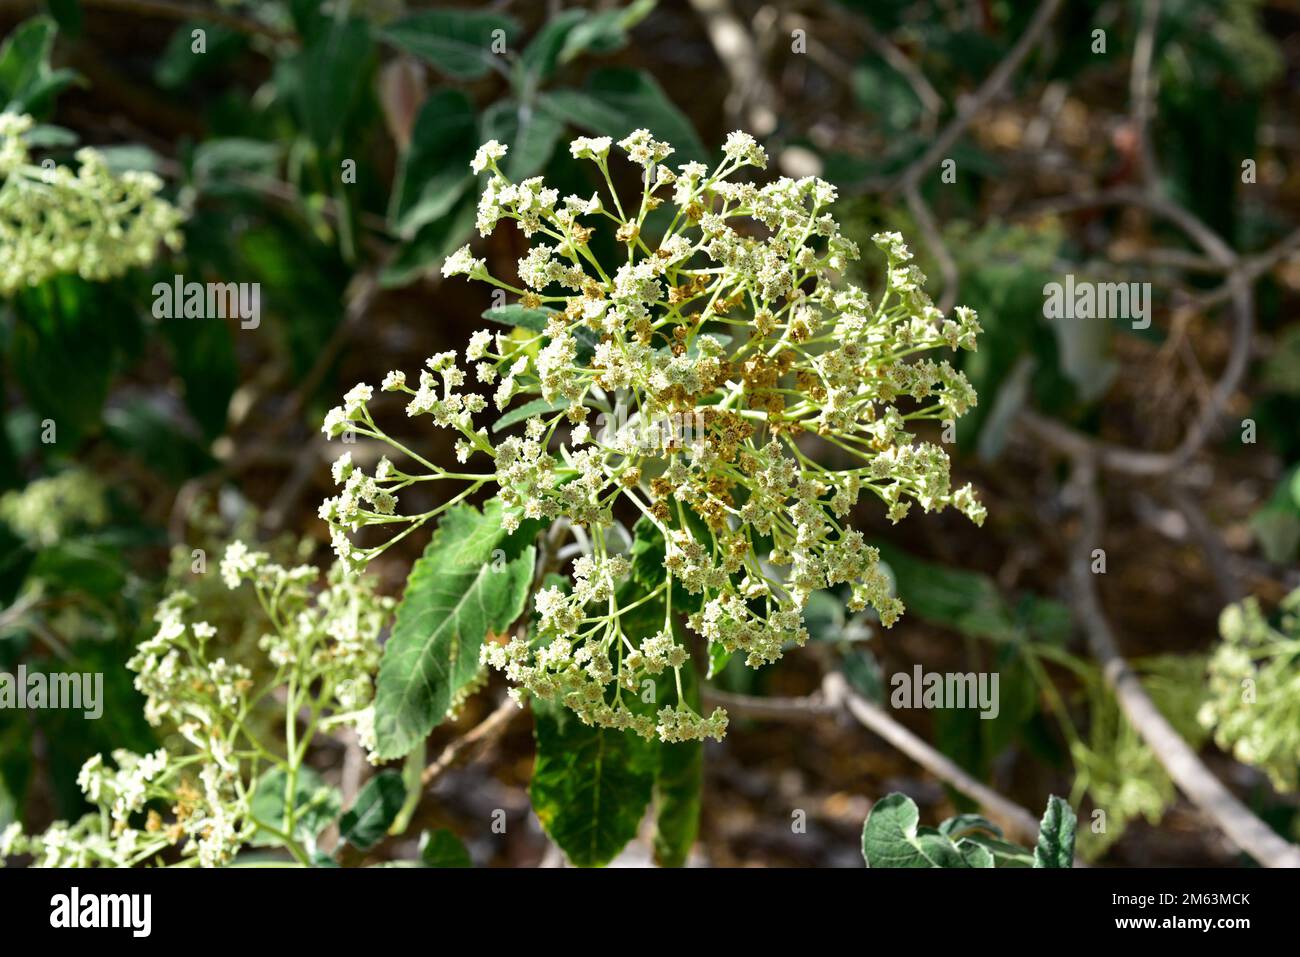 Ciguapa or otatillo (Parthenium tomentosum) is a small tree native to arid regions of Mexico. Inflorescence detail. Stock Photo